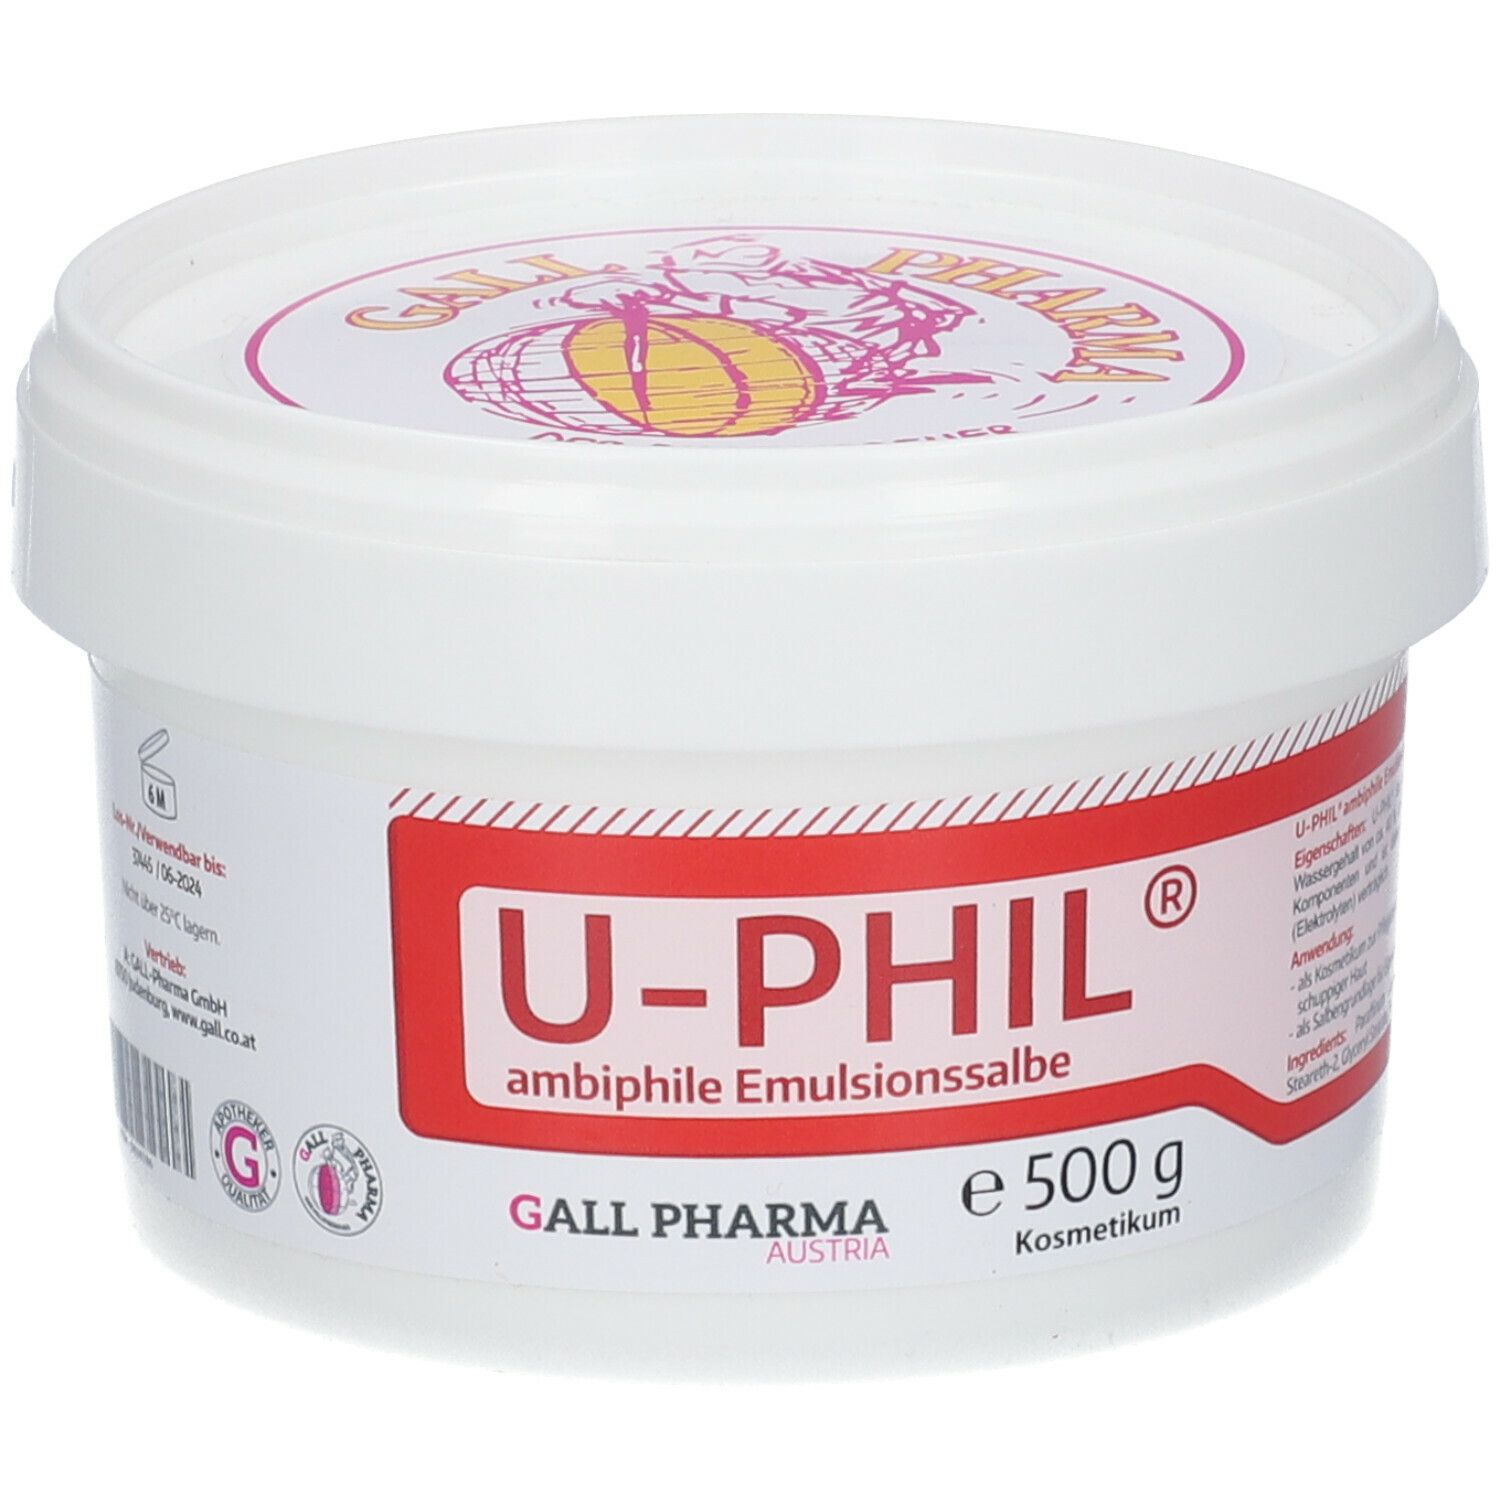 Image of U-PHIL® ambiphile Emulsionssalbe